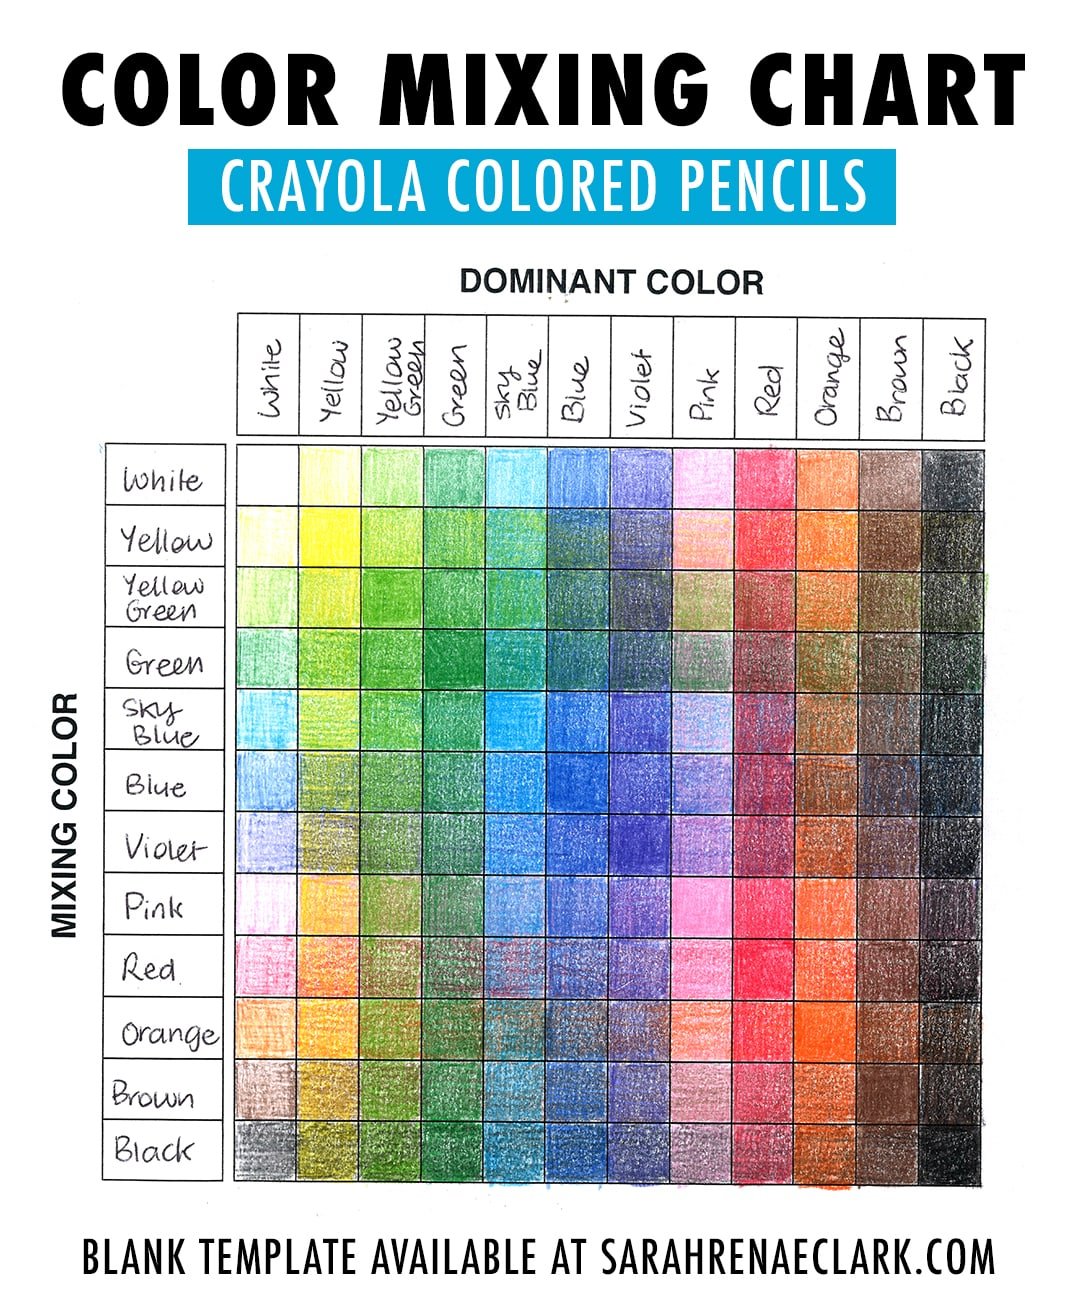 CRAYOLA color mixing chart